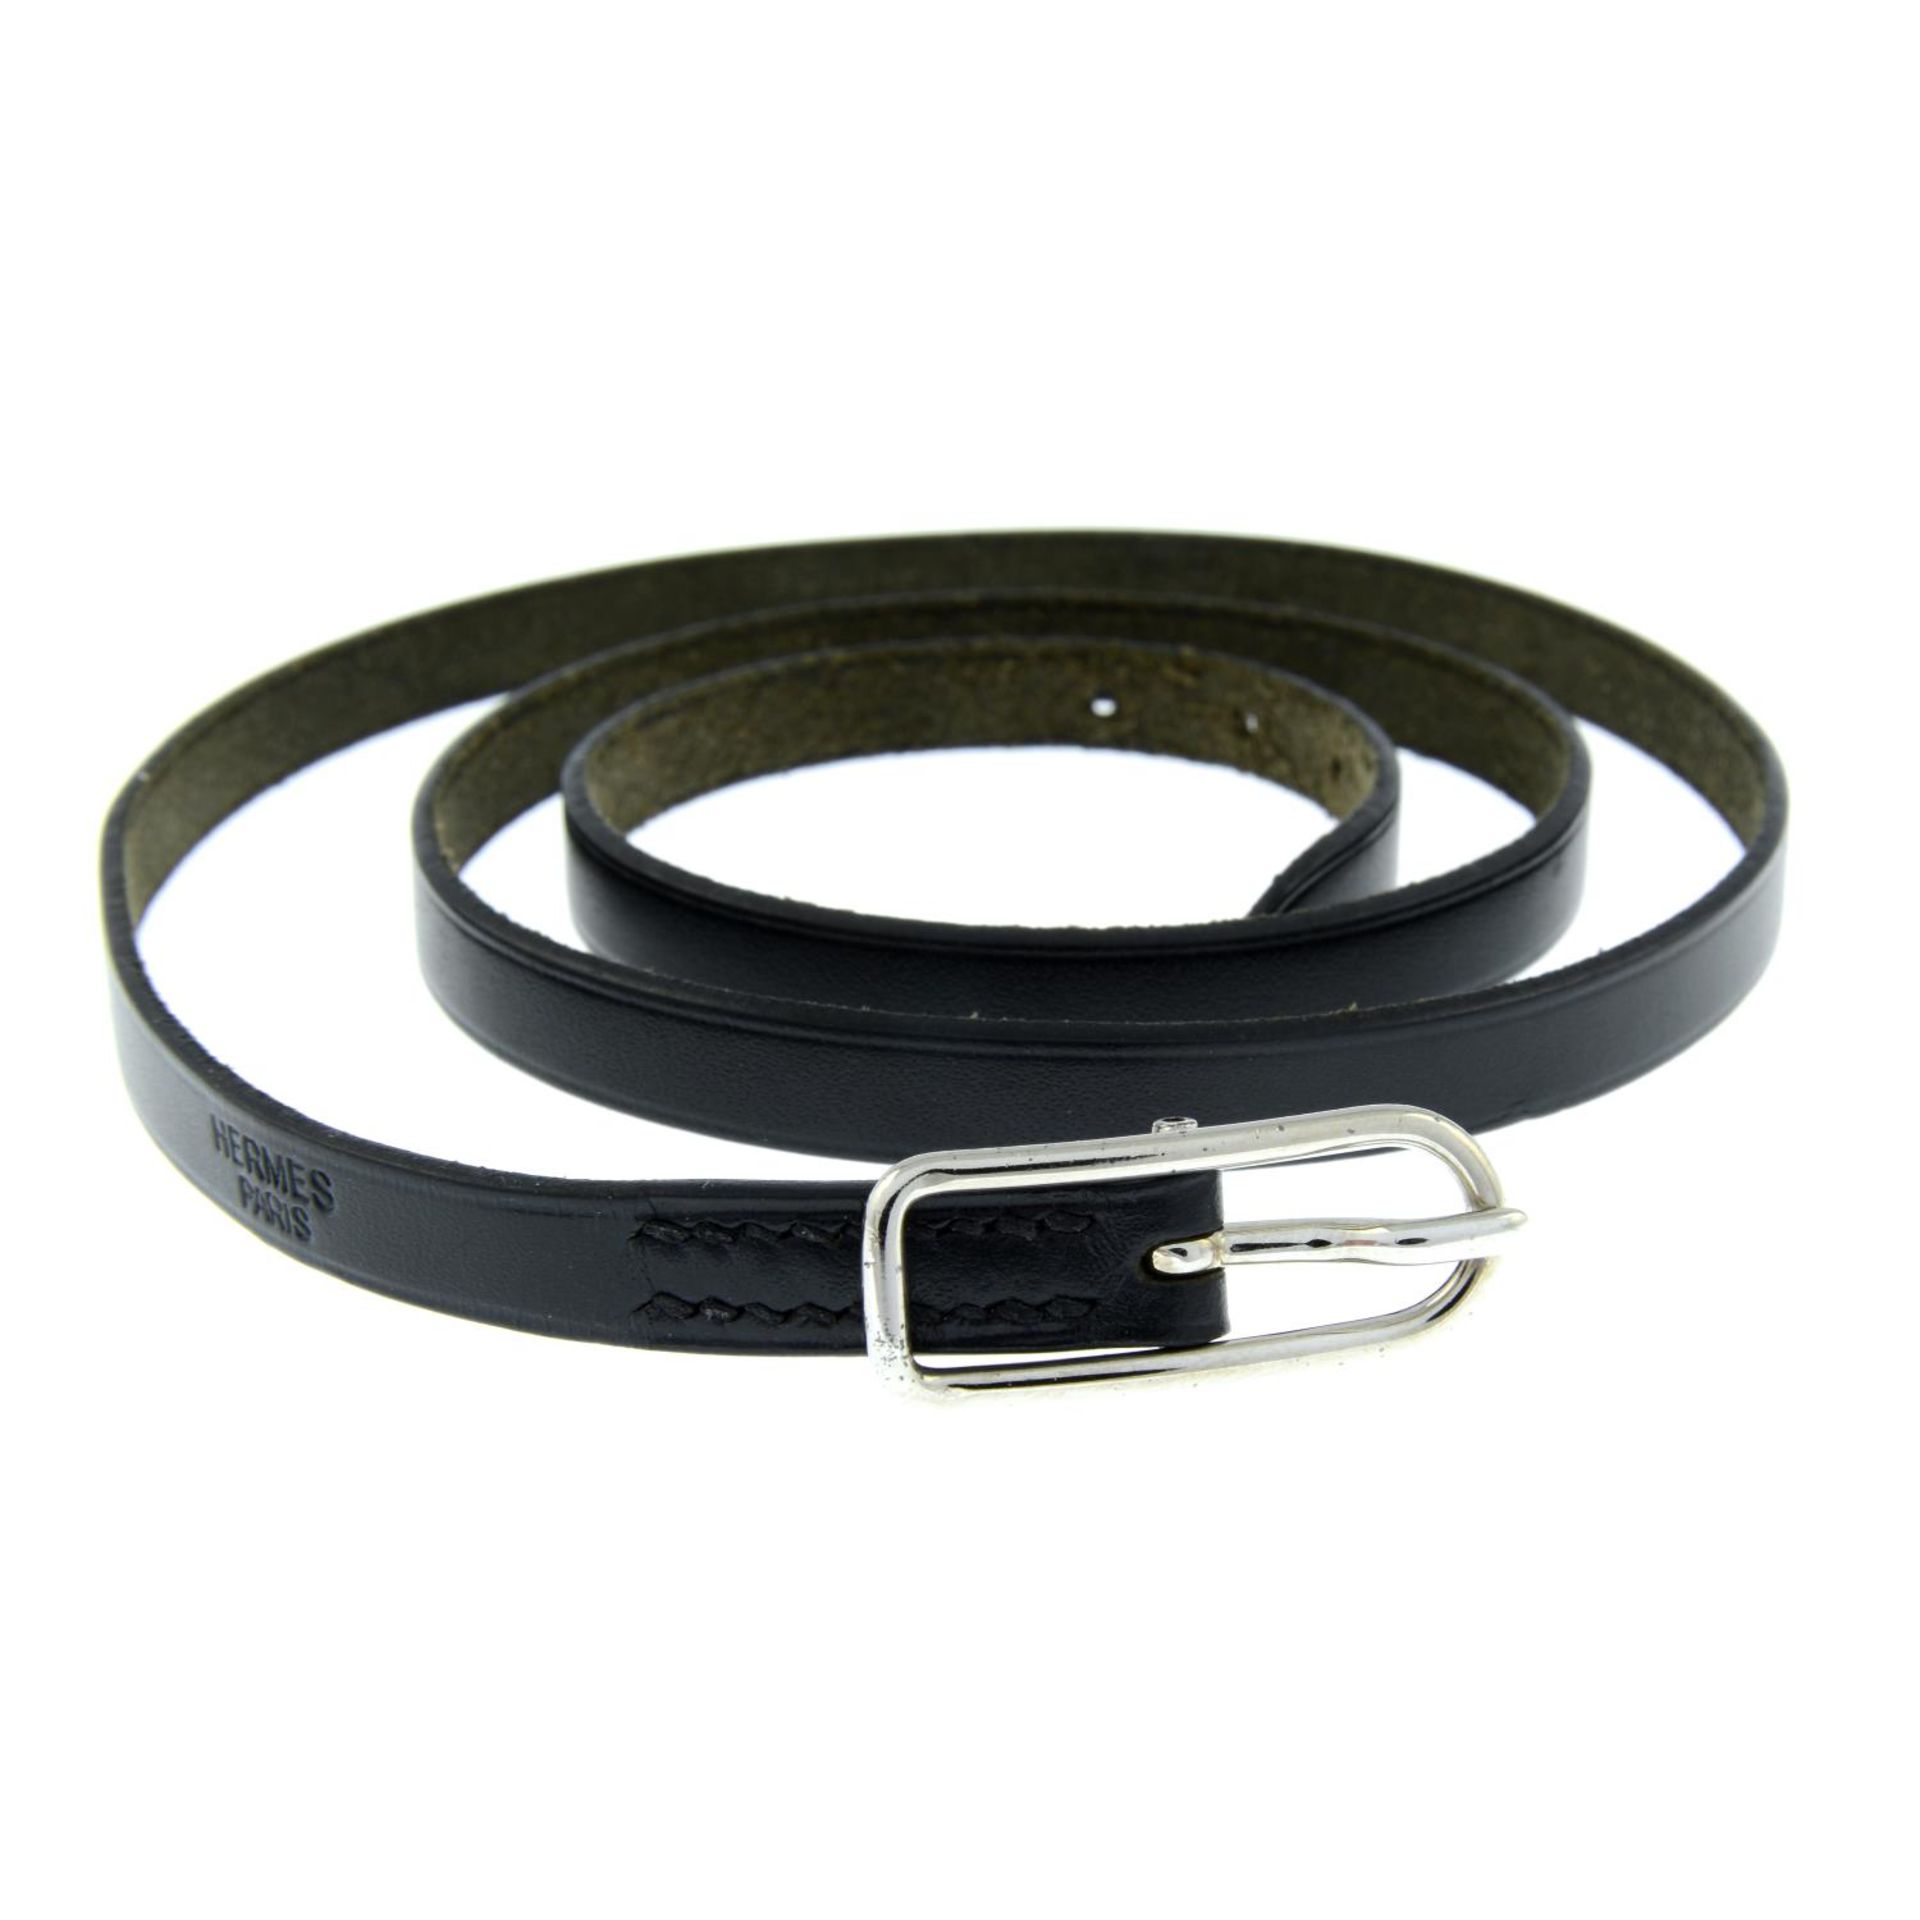 HERMÈS - a black leather wrap bracelet. - Image 2 of 4